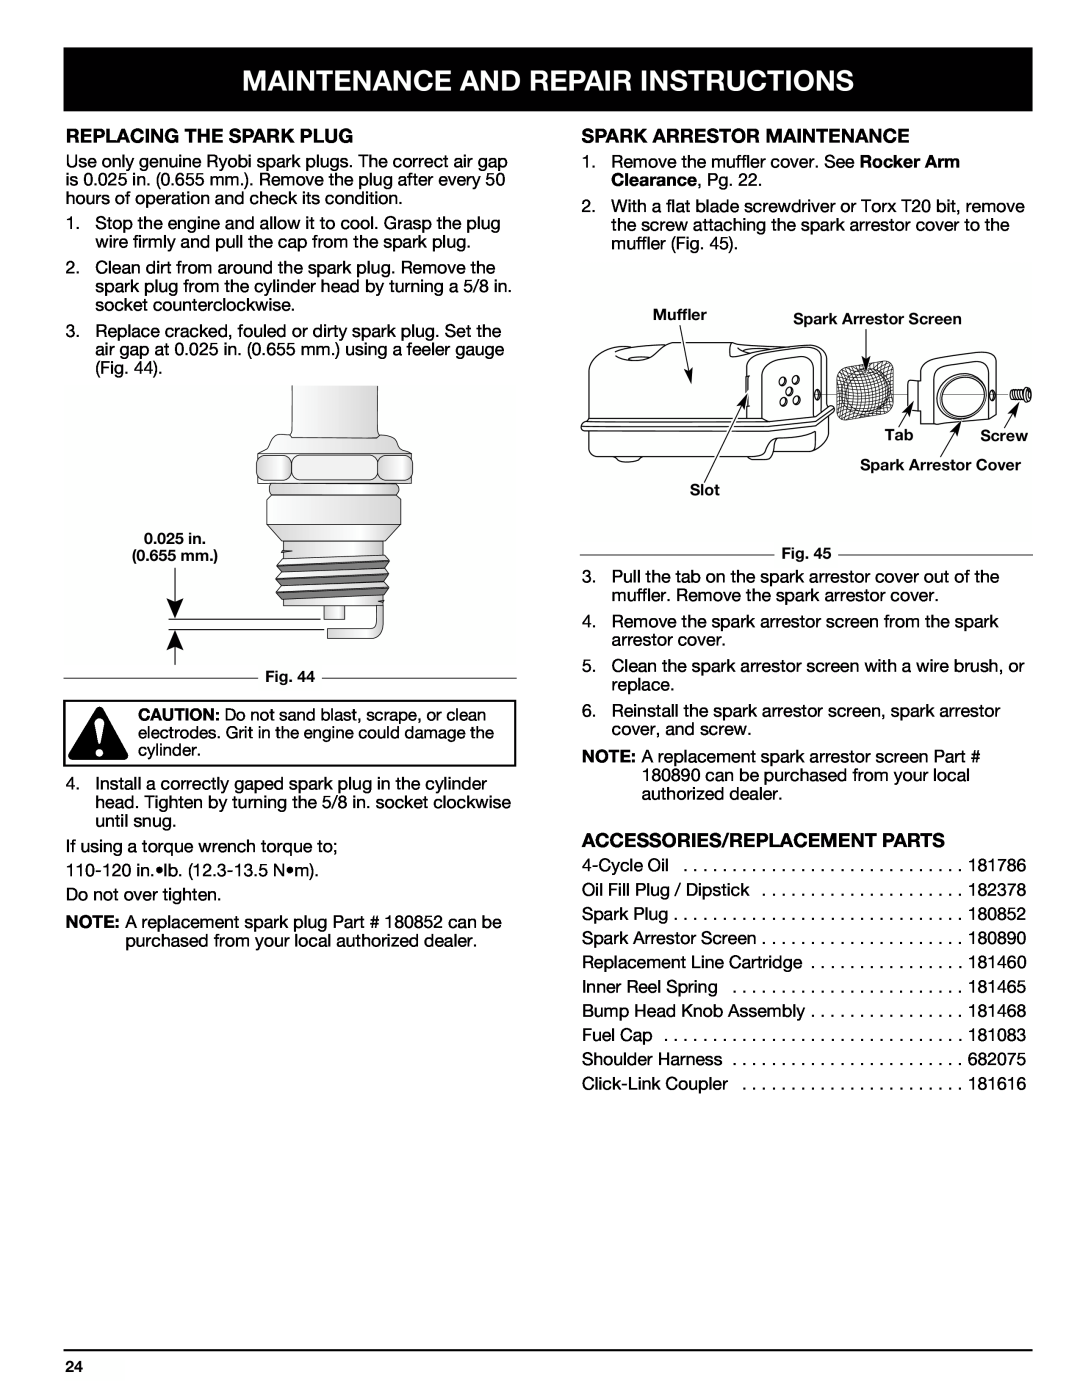 Ryobi Outdoor 875r manual Replacing The Spark Plug, Spark Arrestor Maintenance, Accessories/Replacement Parts, Muffler 